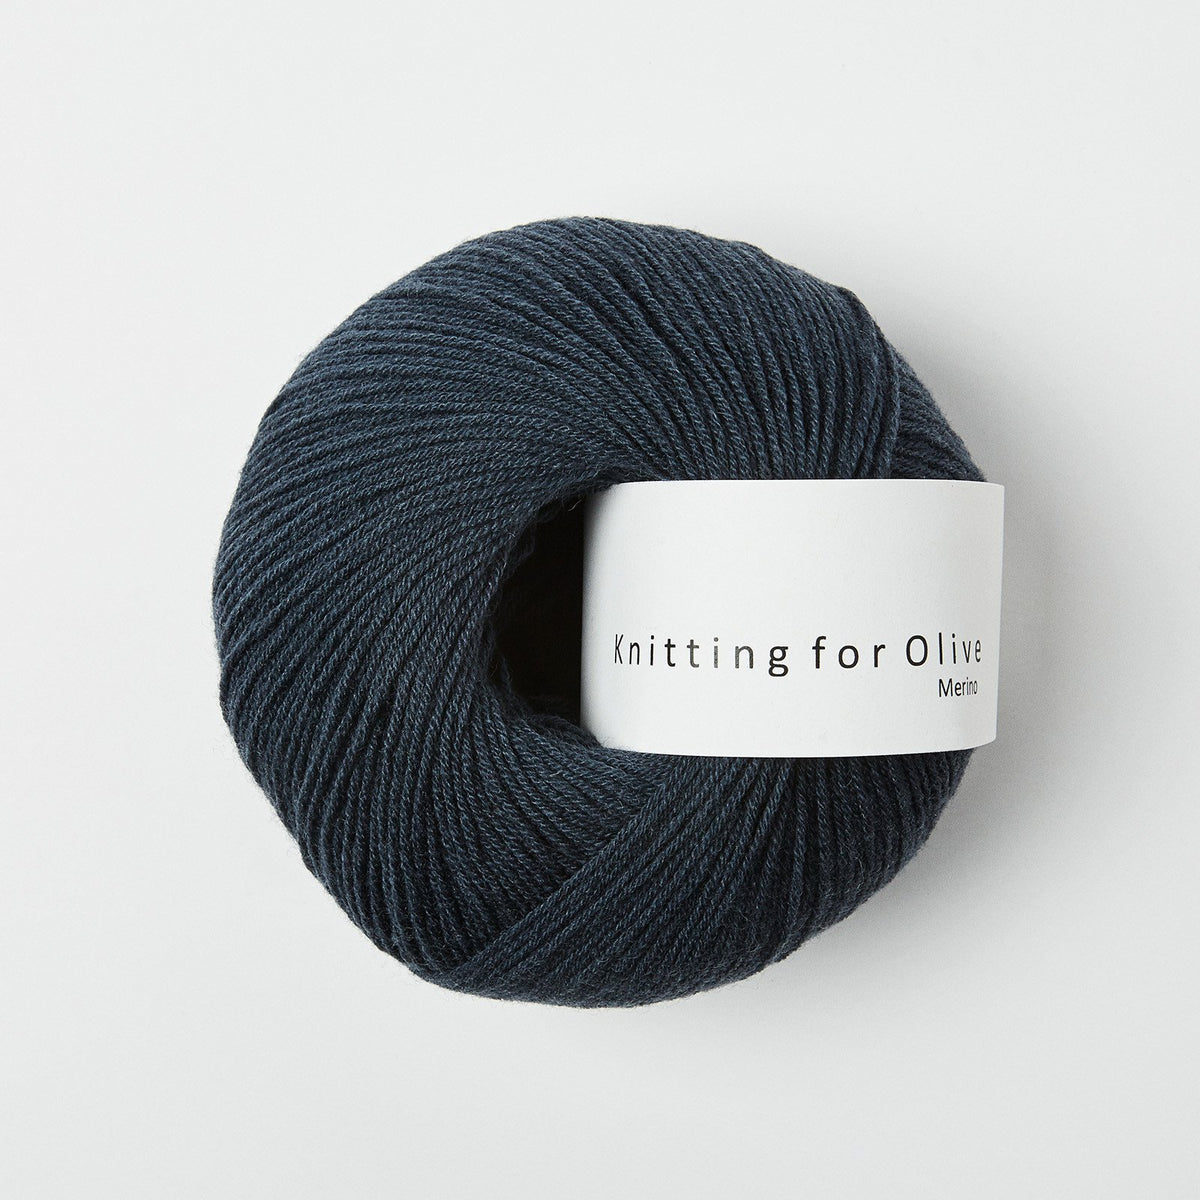 Knitting_for_olive_merino_dybpetroliumsb